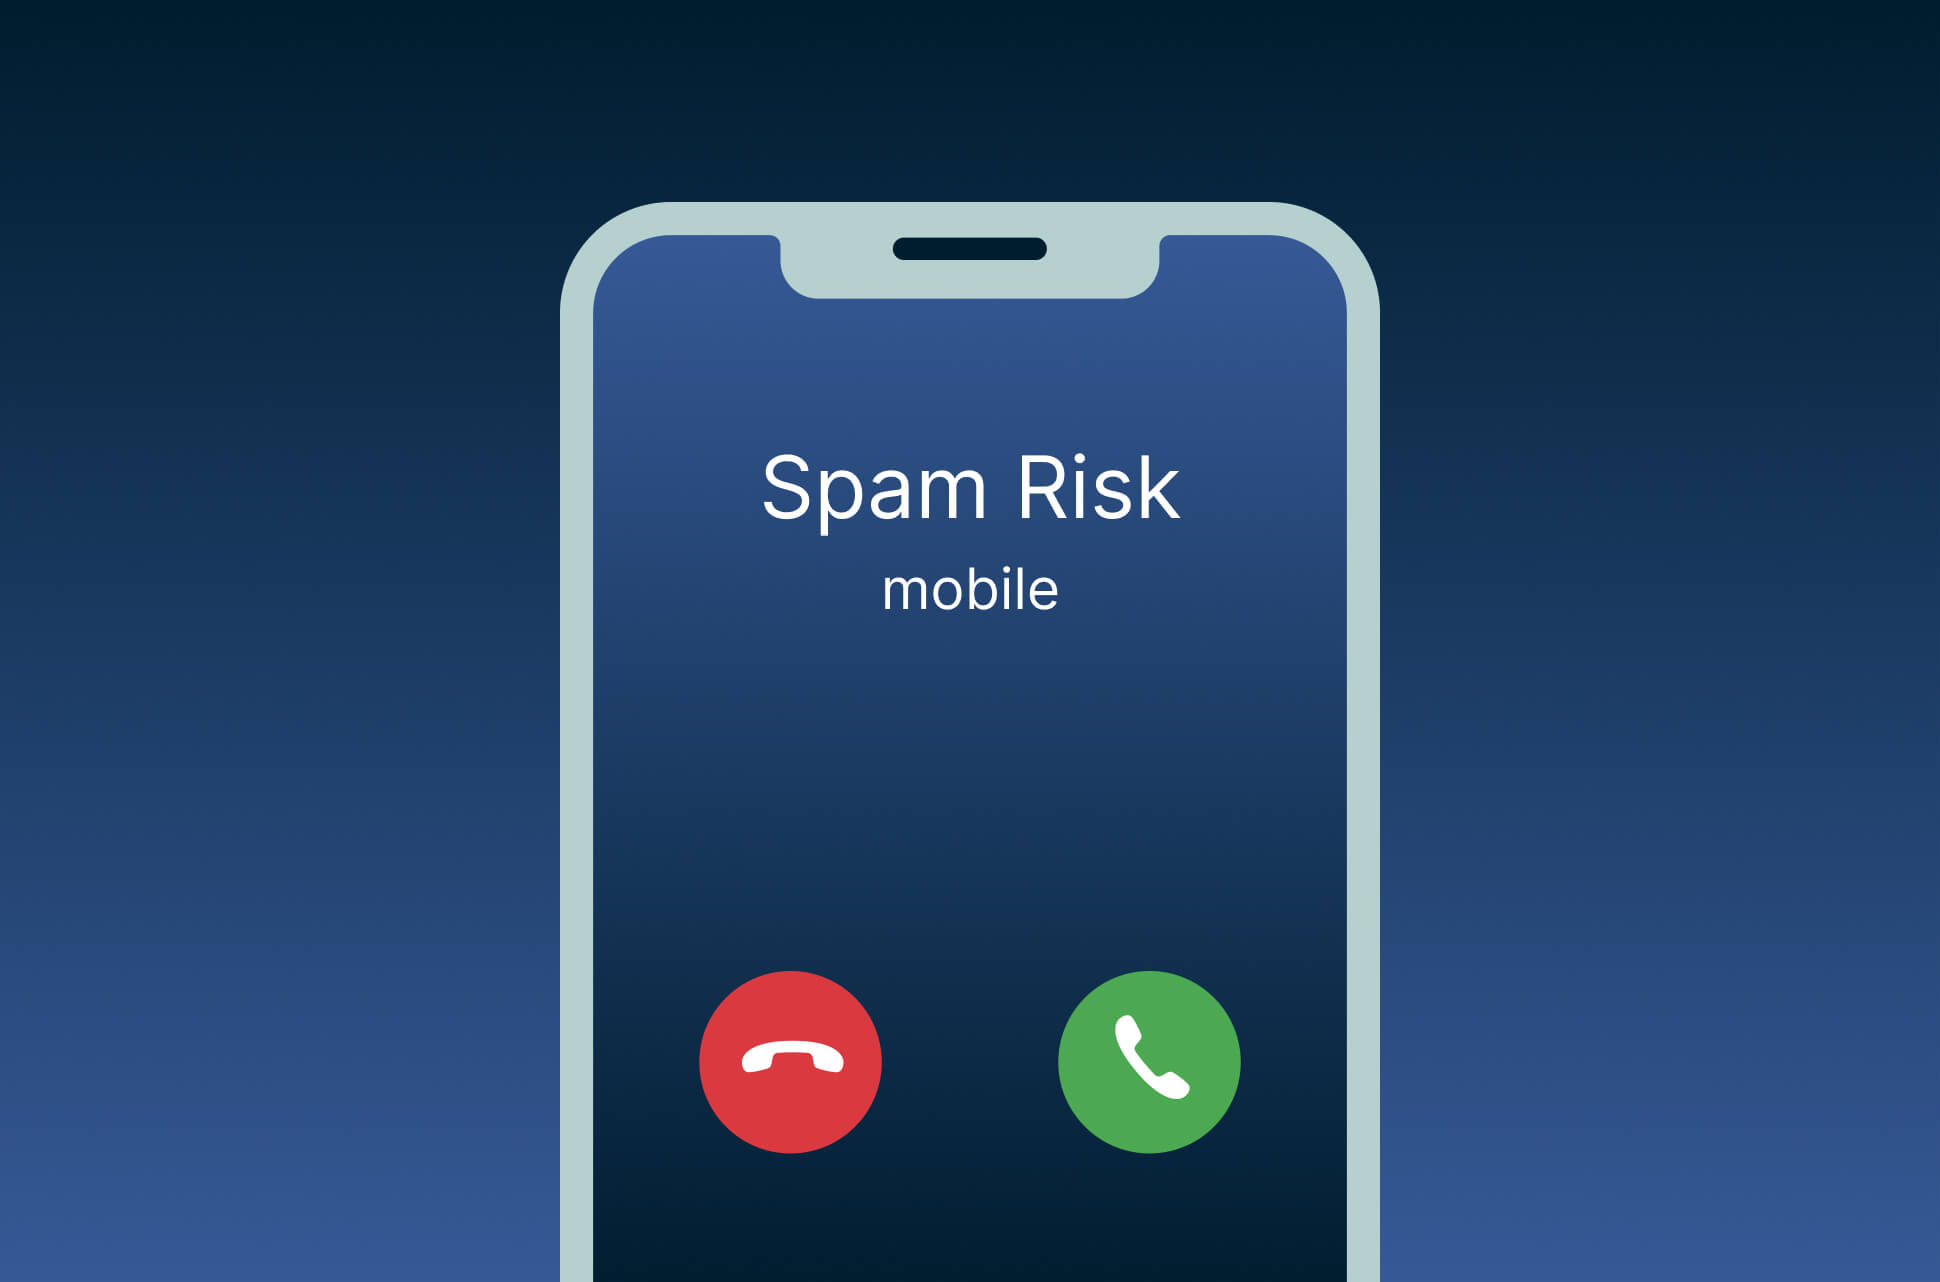 A phone receiving a spam call